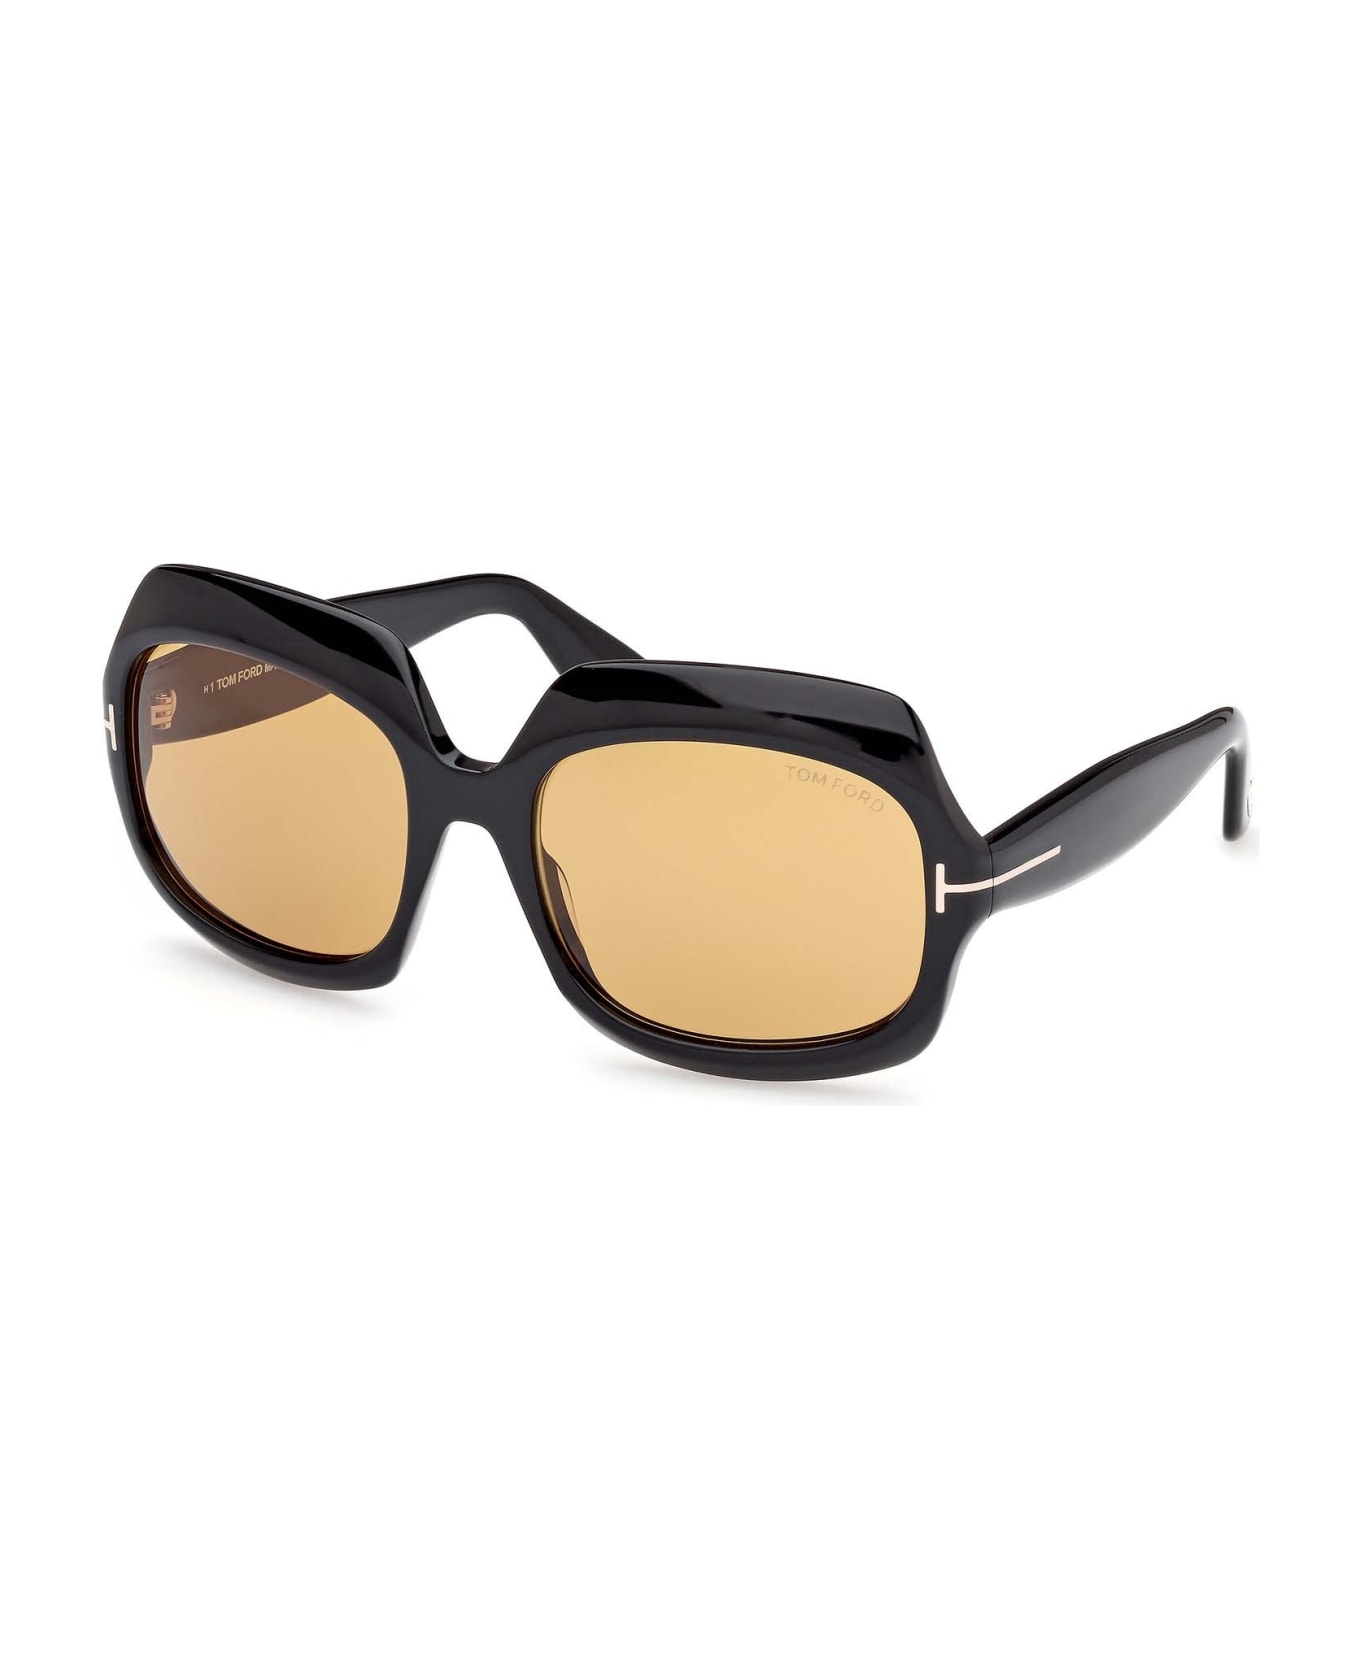 Tom Ford Eyewear Sunglasses - Nero/Giallo